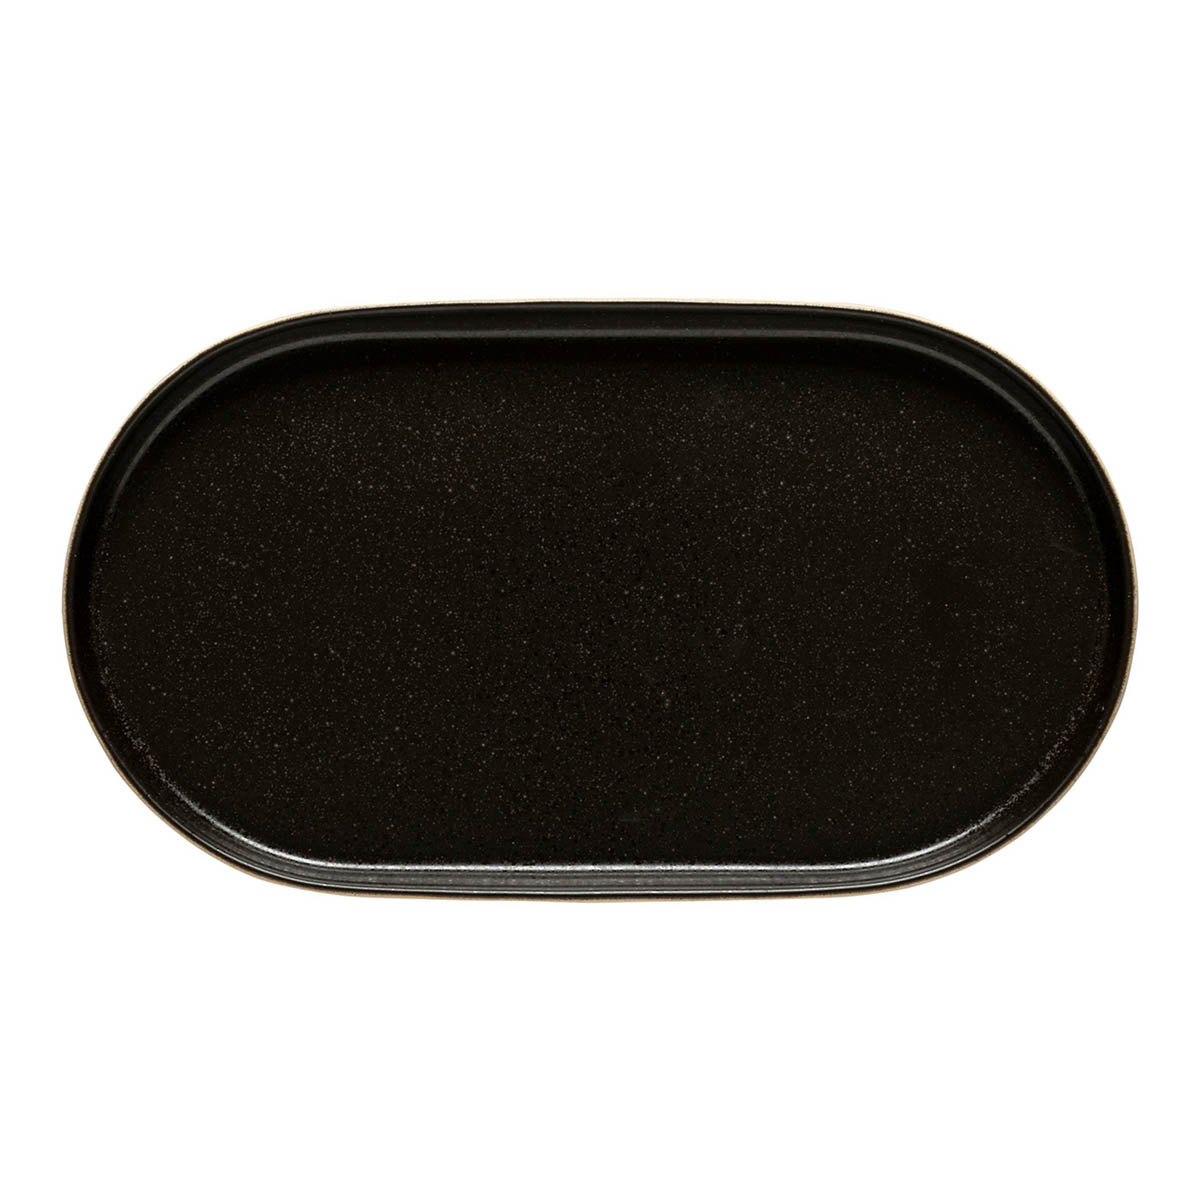 301162 Costa Nova Notos Latitude Black Oval Platter 365x205mm Tomkin Australia Hospitality Supplies